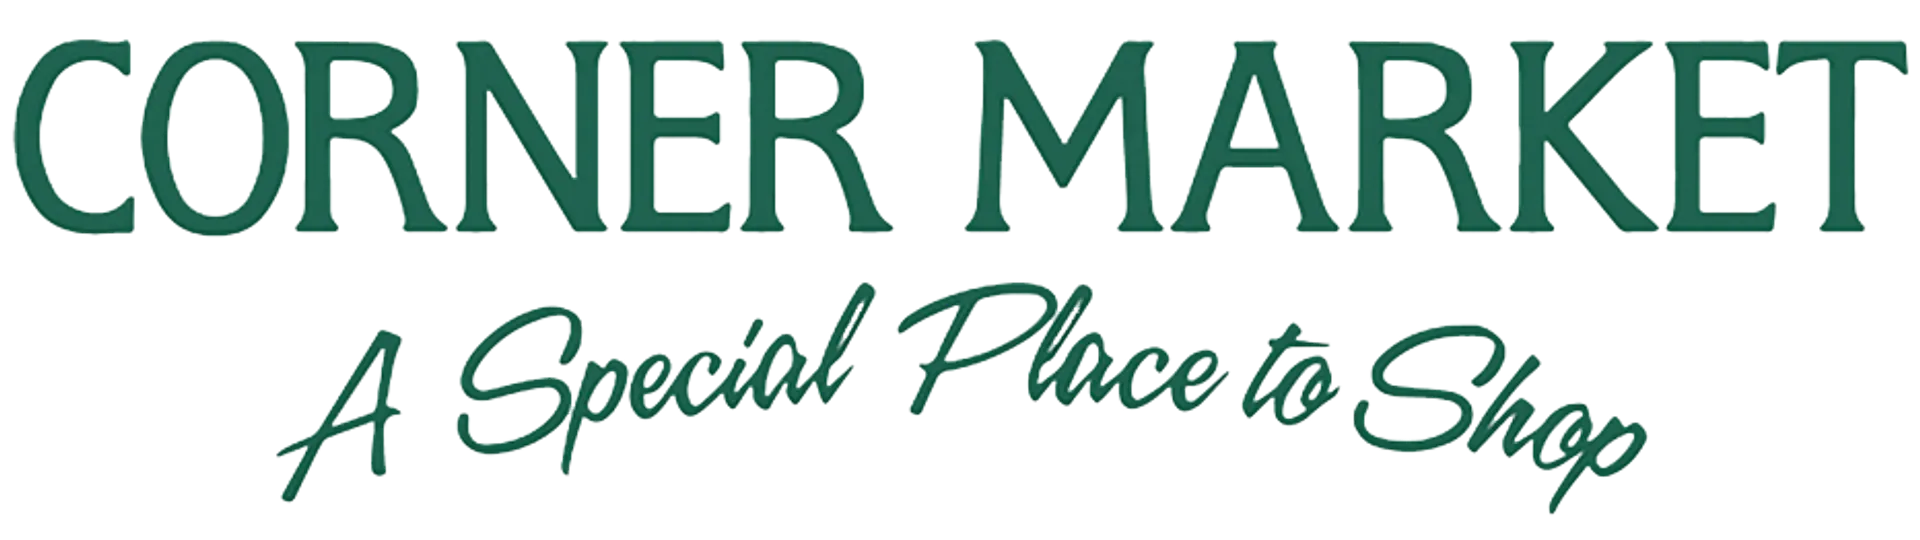 CORNER MARKET logo. Current weekly ad